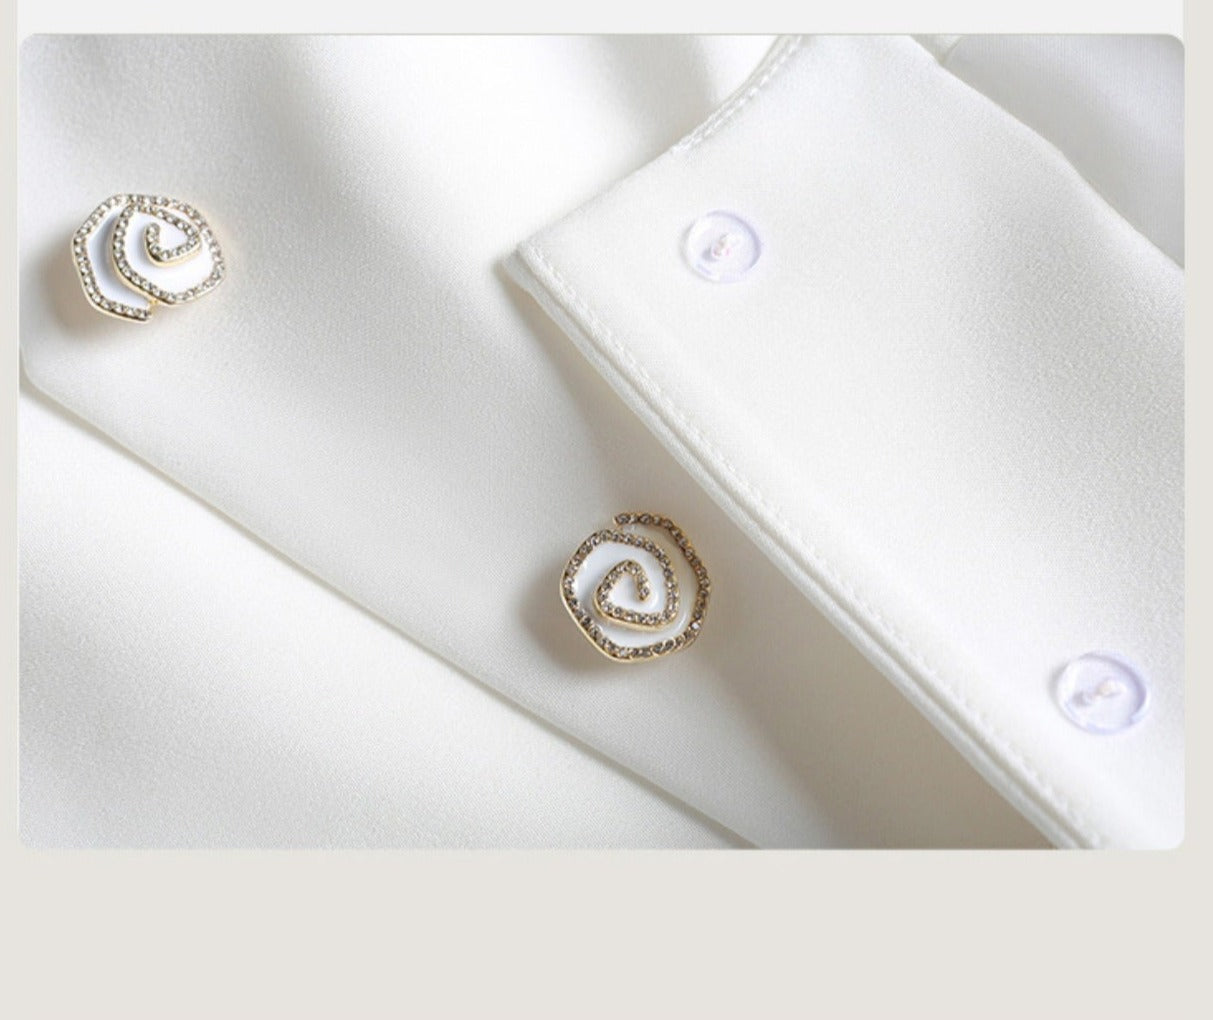 Magic Q  white rose embroidered high waist suit vest wide-leg pants set - Nelli